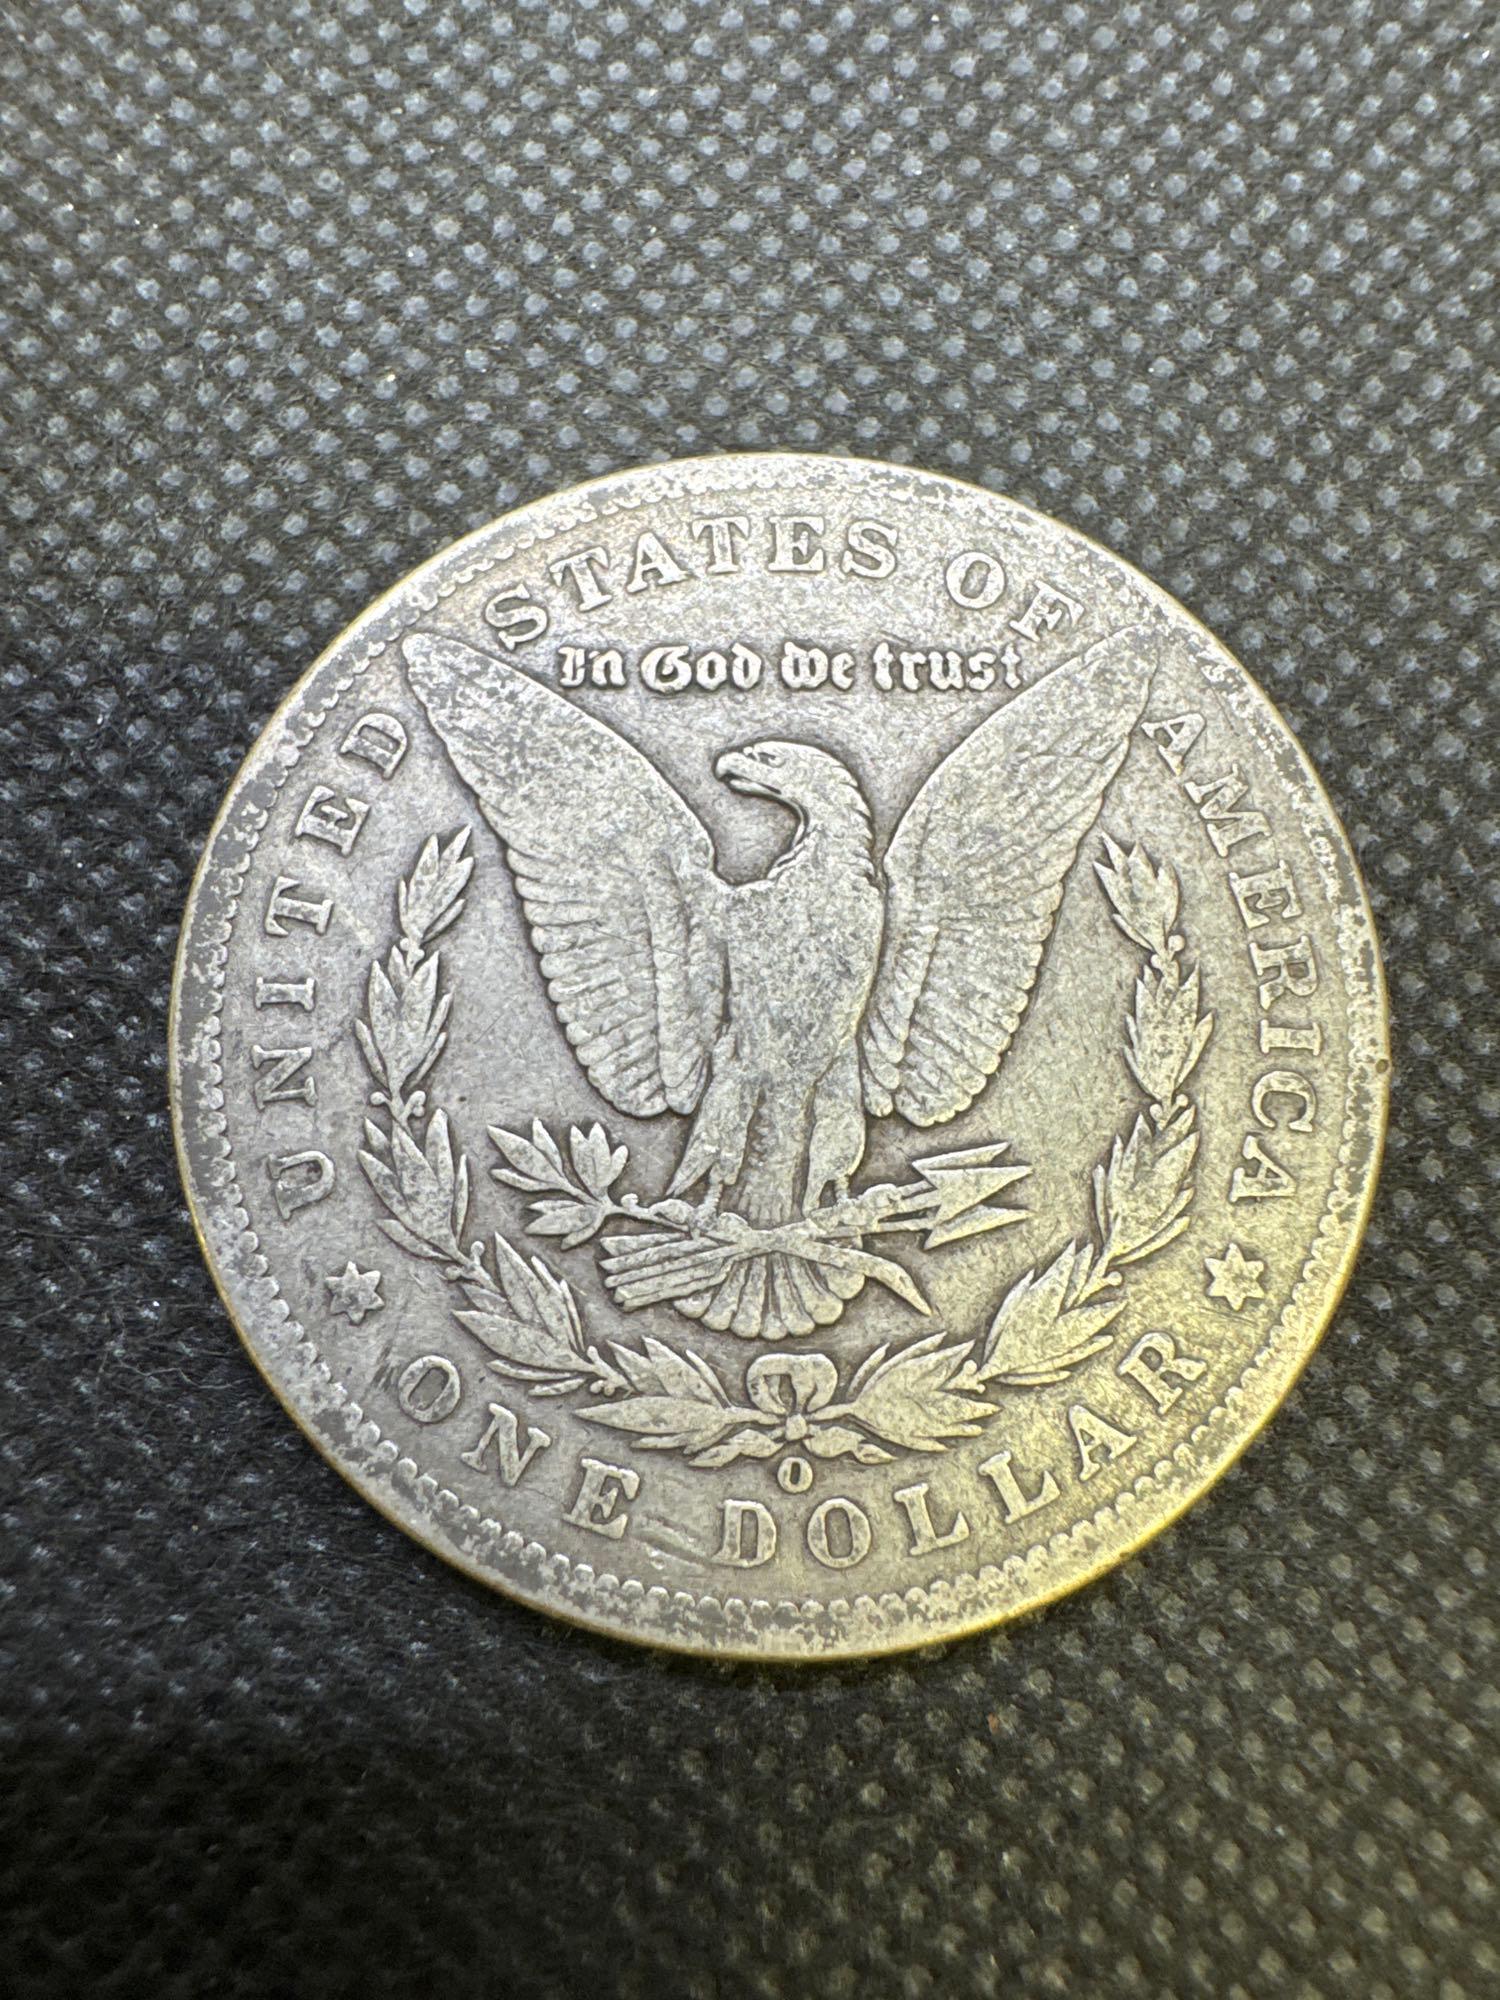 2x 1899 Morgan Silver Dollars 90% Silver Coins 1.84 Oz